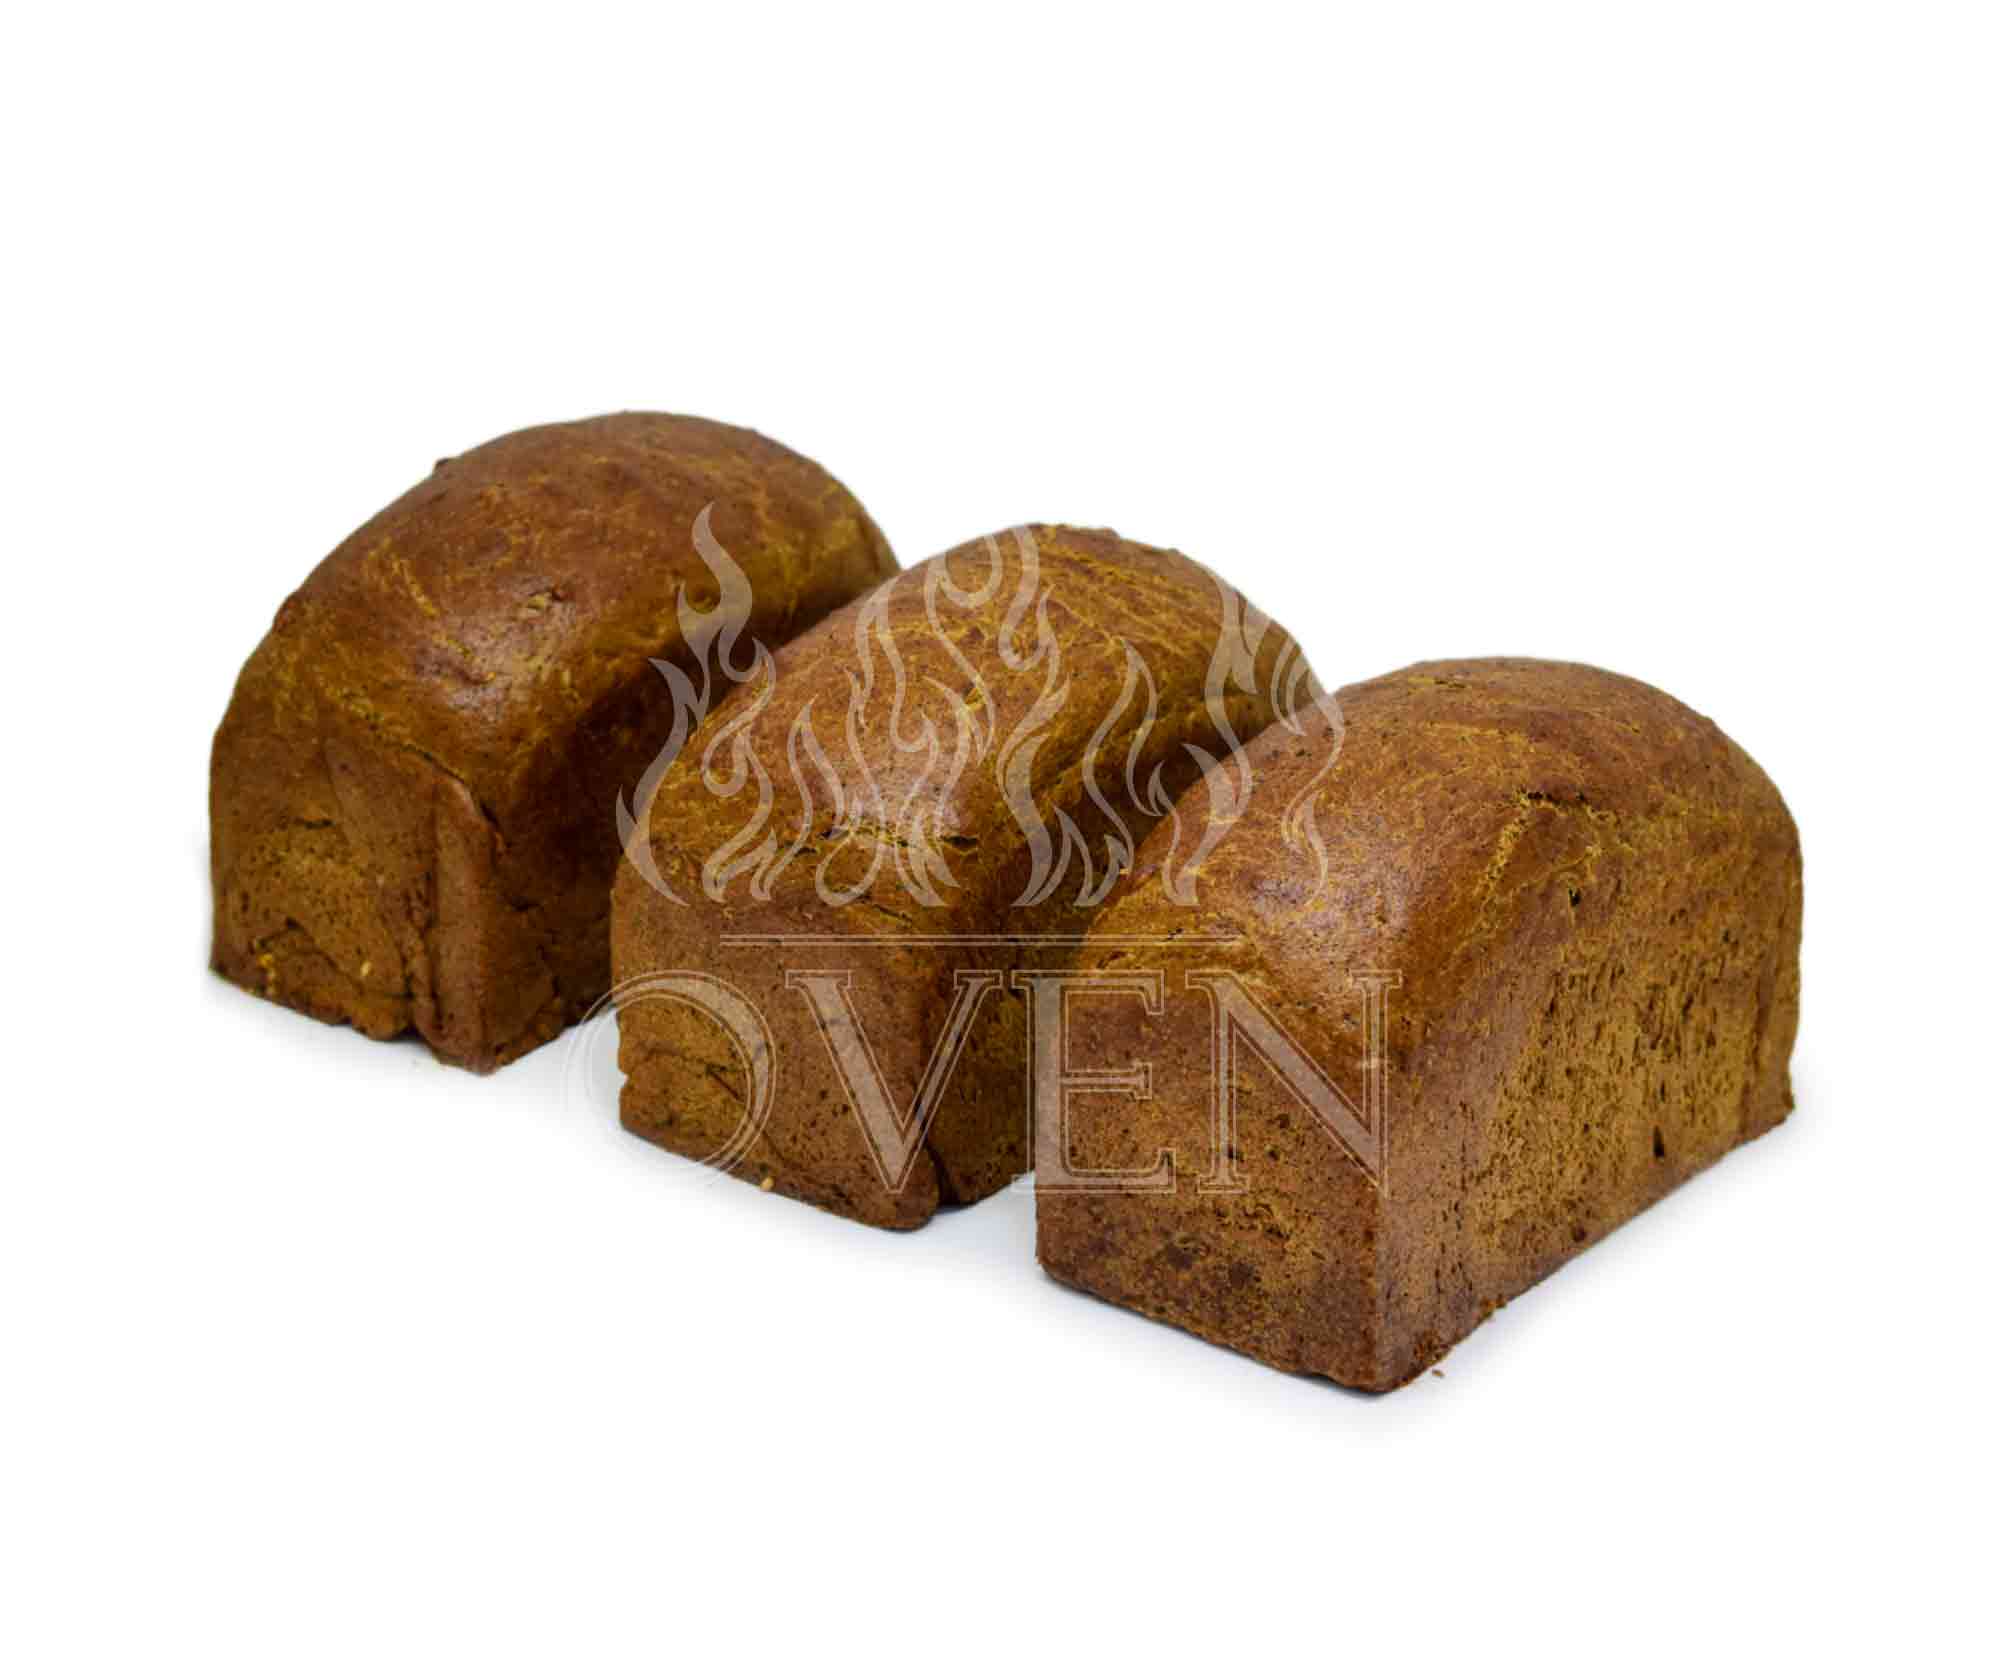 Lapland bread